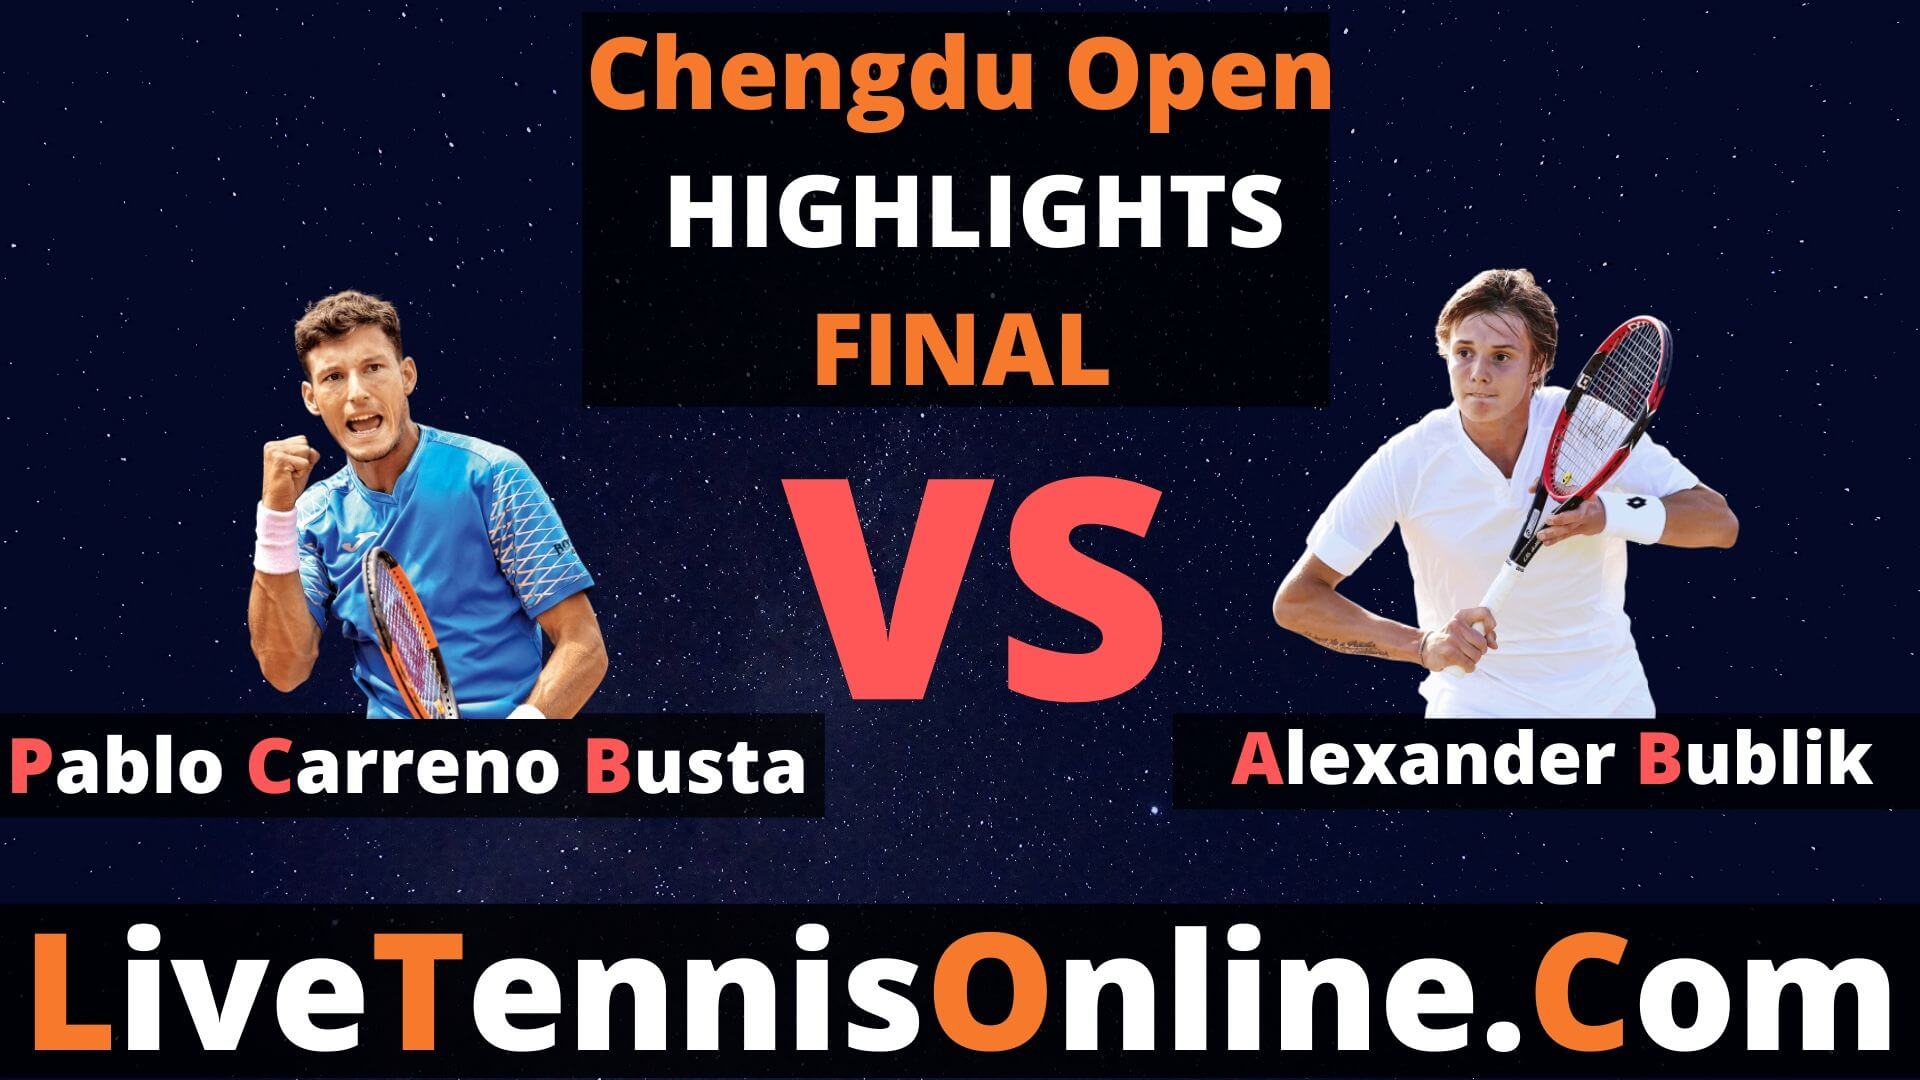 Pablo Carreno Busta Vs Alexander Bublik Highlights 2019 Chengdu Open Final